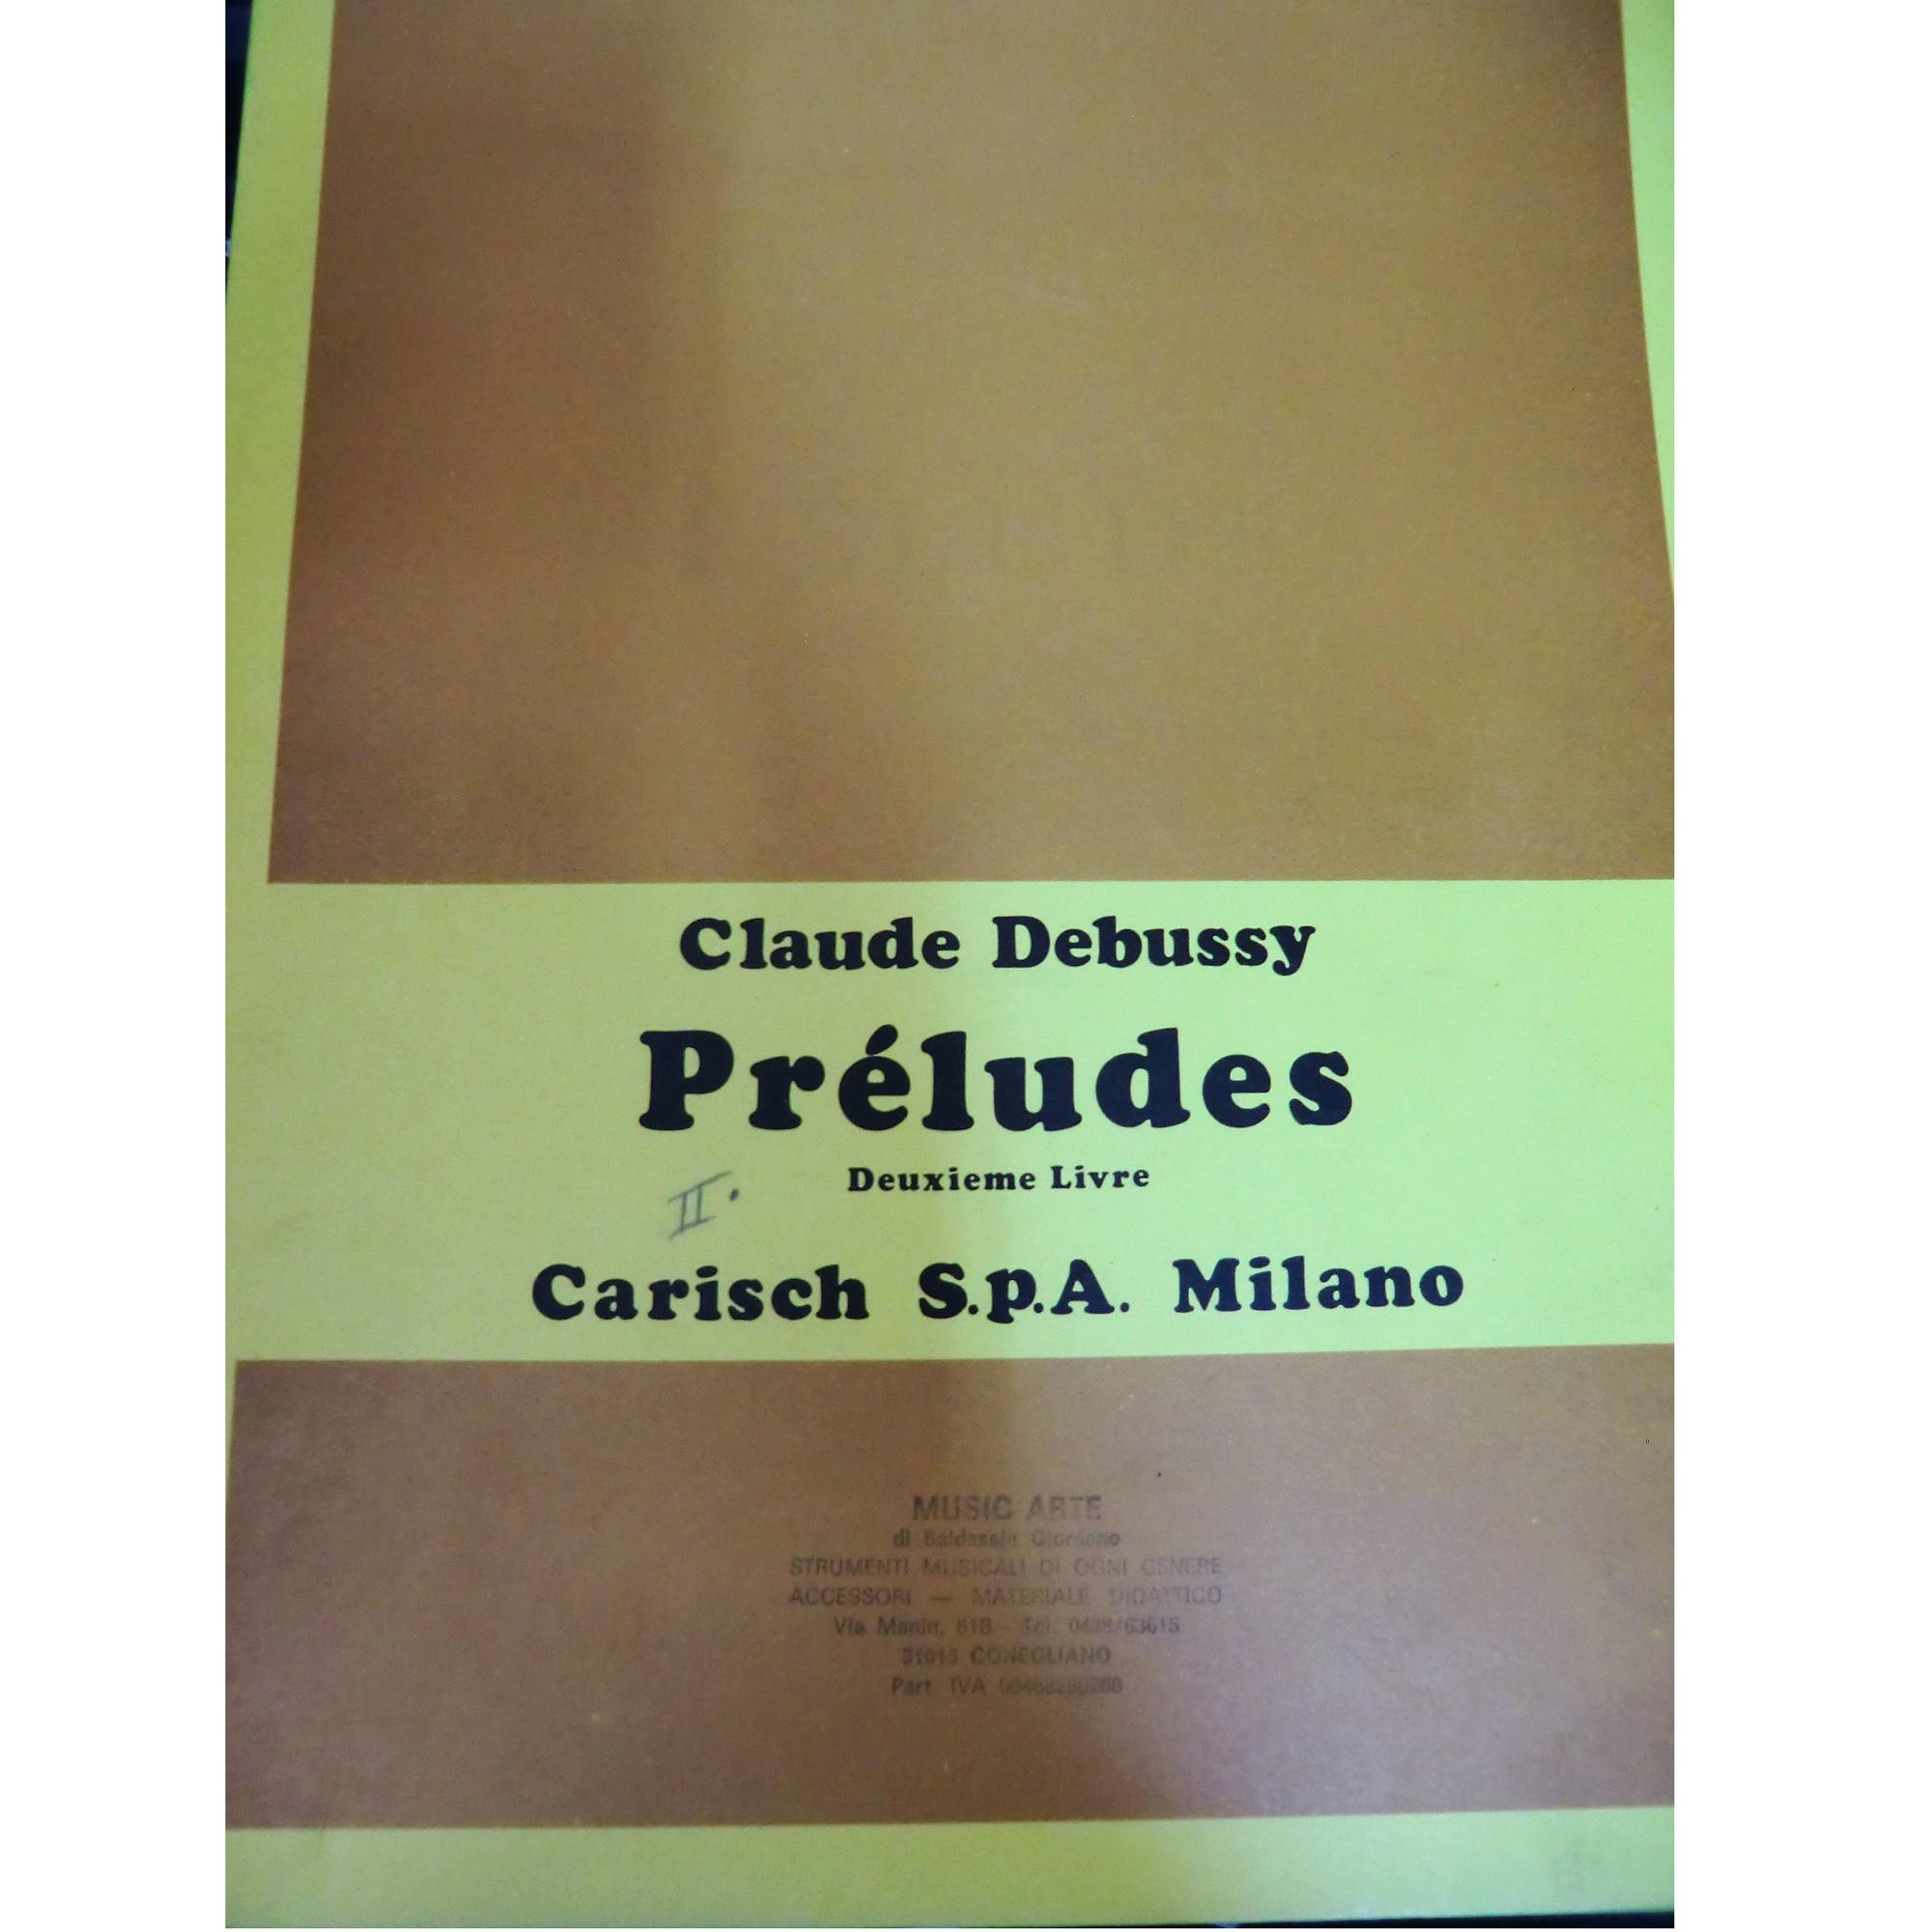 Debussy Preludes Deuxieme Livre - Carisch S.p.a Milano